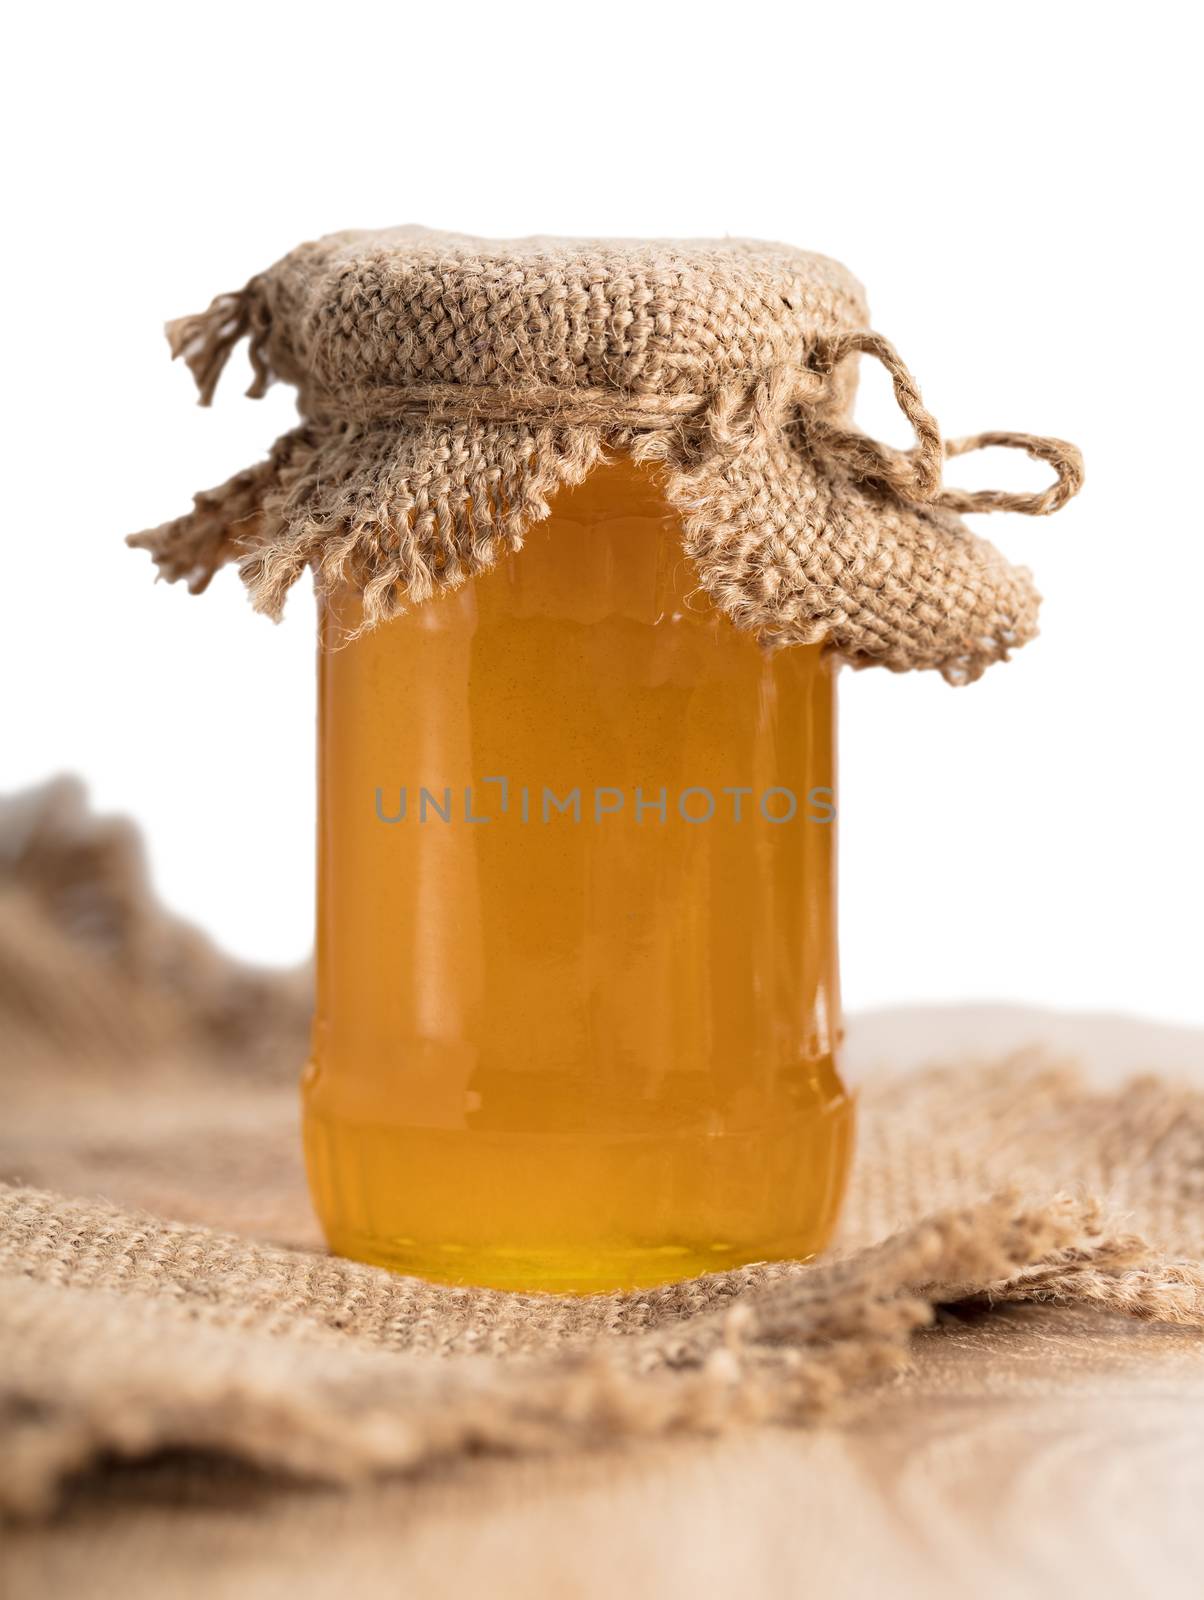  jar with honey close-up on white background